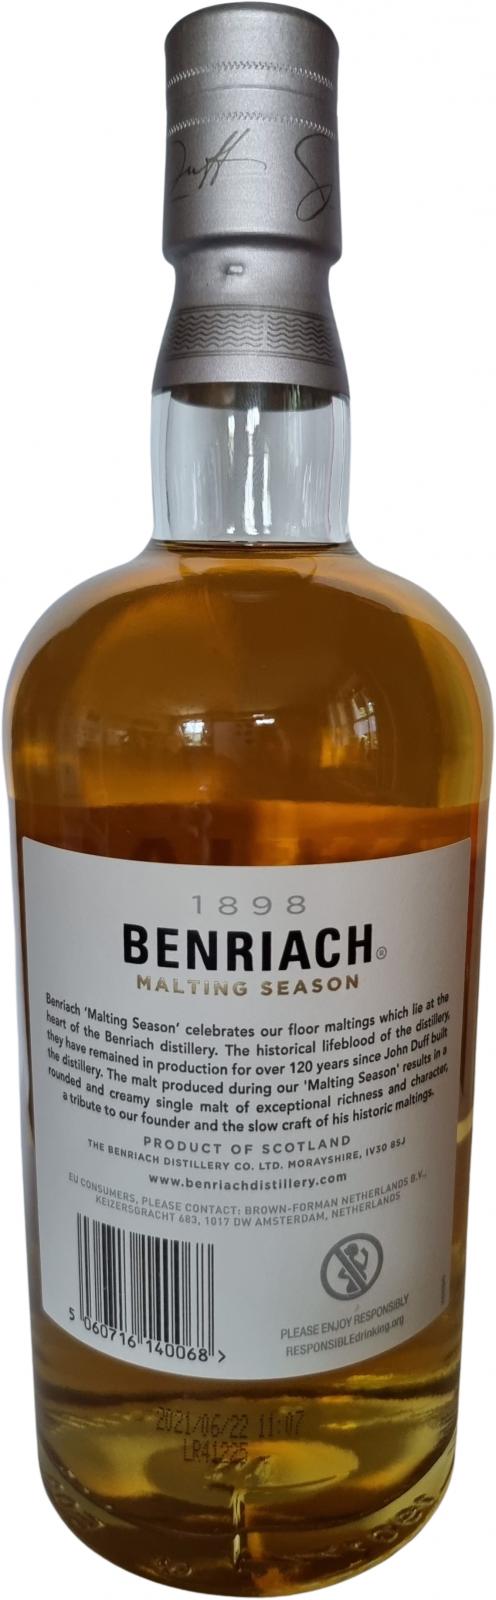 BenRiach Malting Season